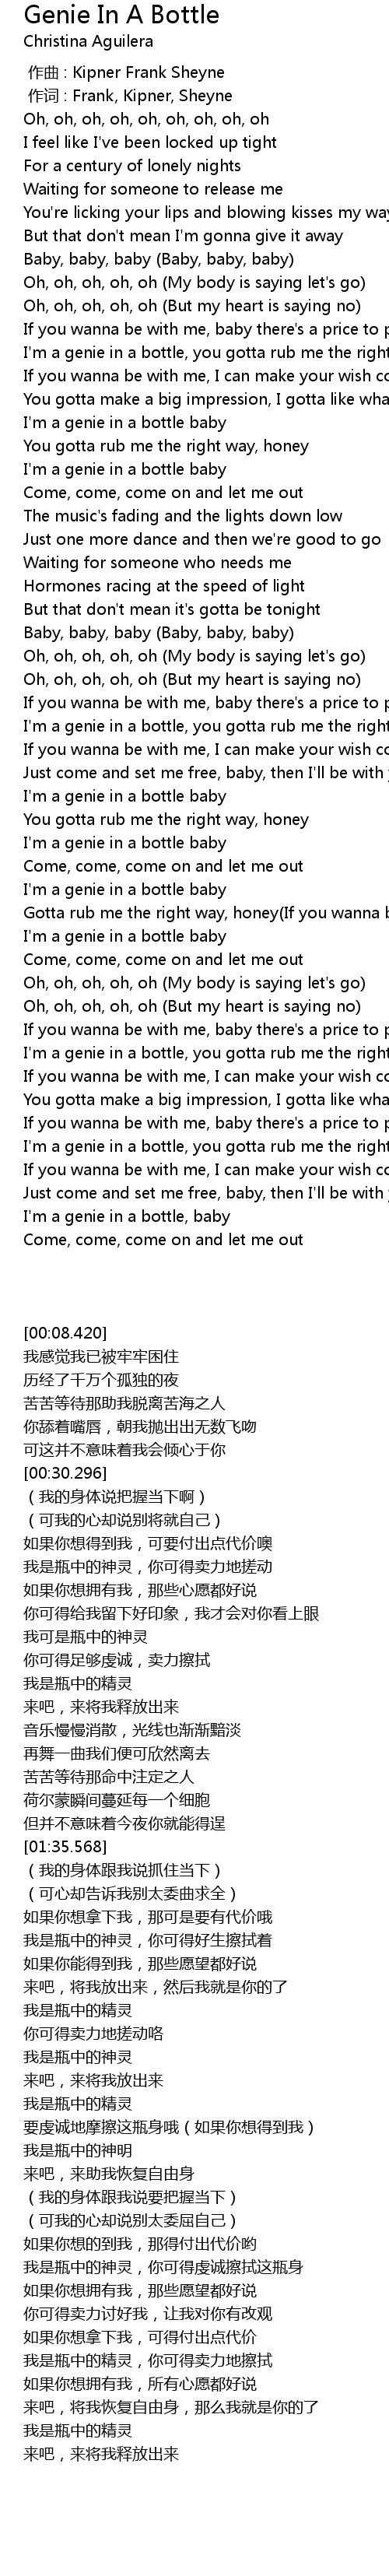 A lyrics in genie bottle DOVE CAMERON